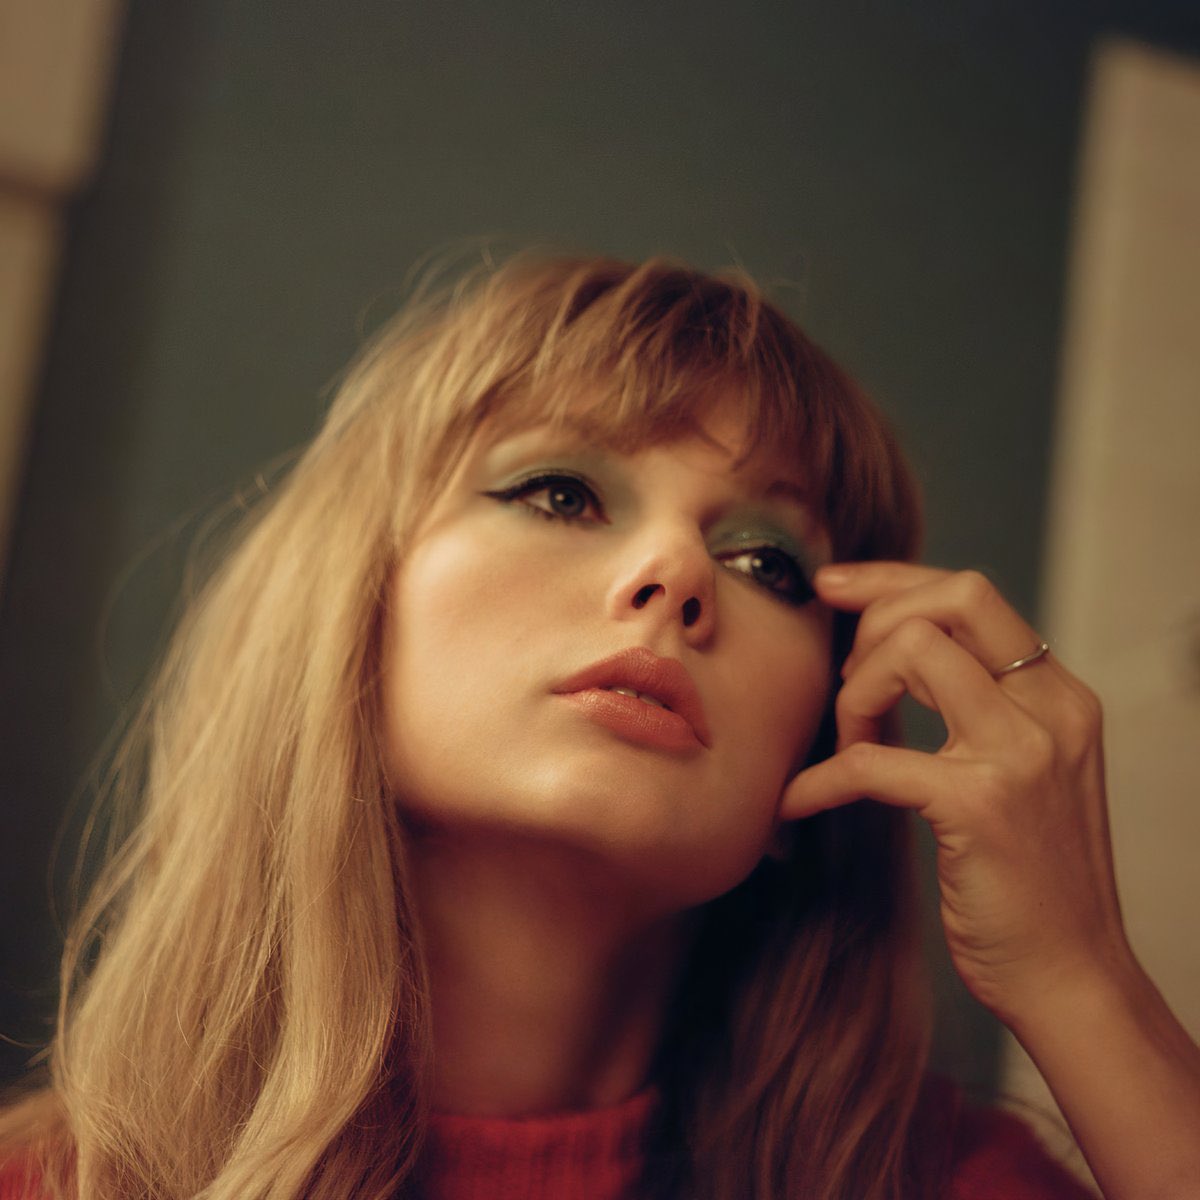 Taylor Swift for Midnights (Beth Garrabrant, 2022)